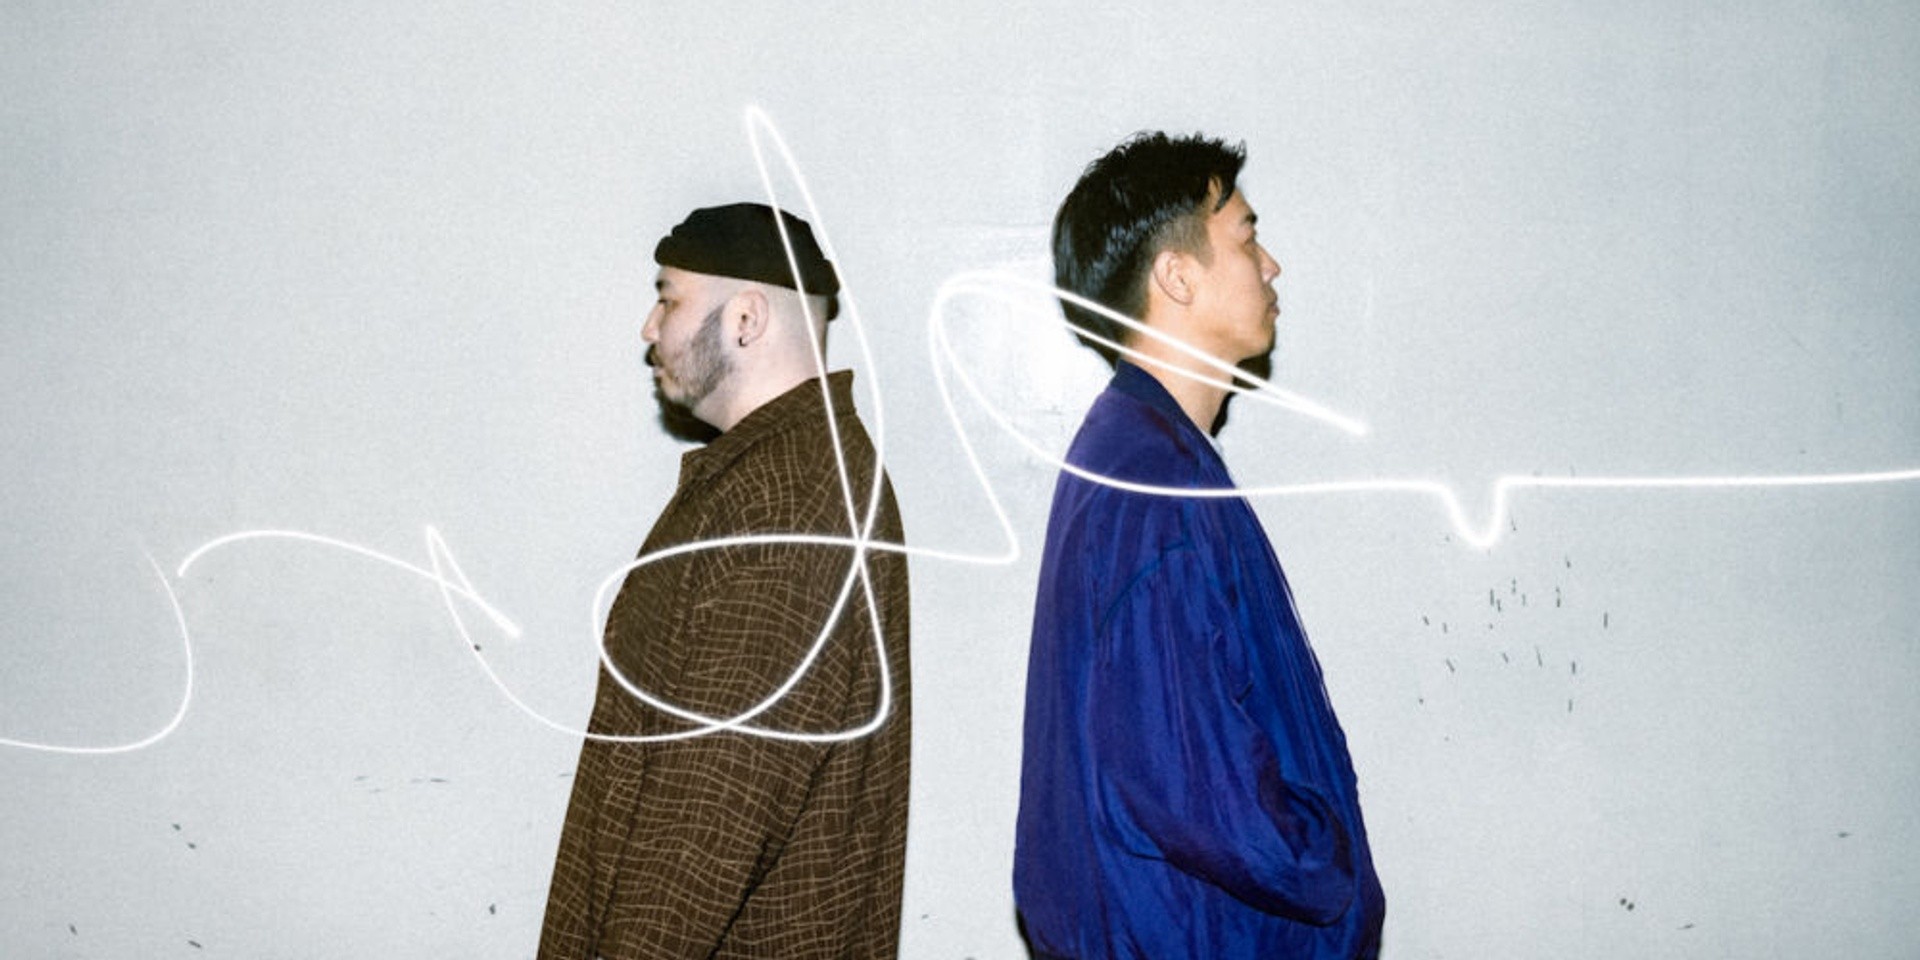 sankara team up with HYUKOH and DJ Namo for new collaborative single 'Louder' – listen